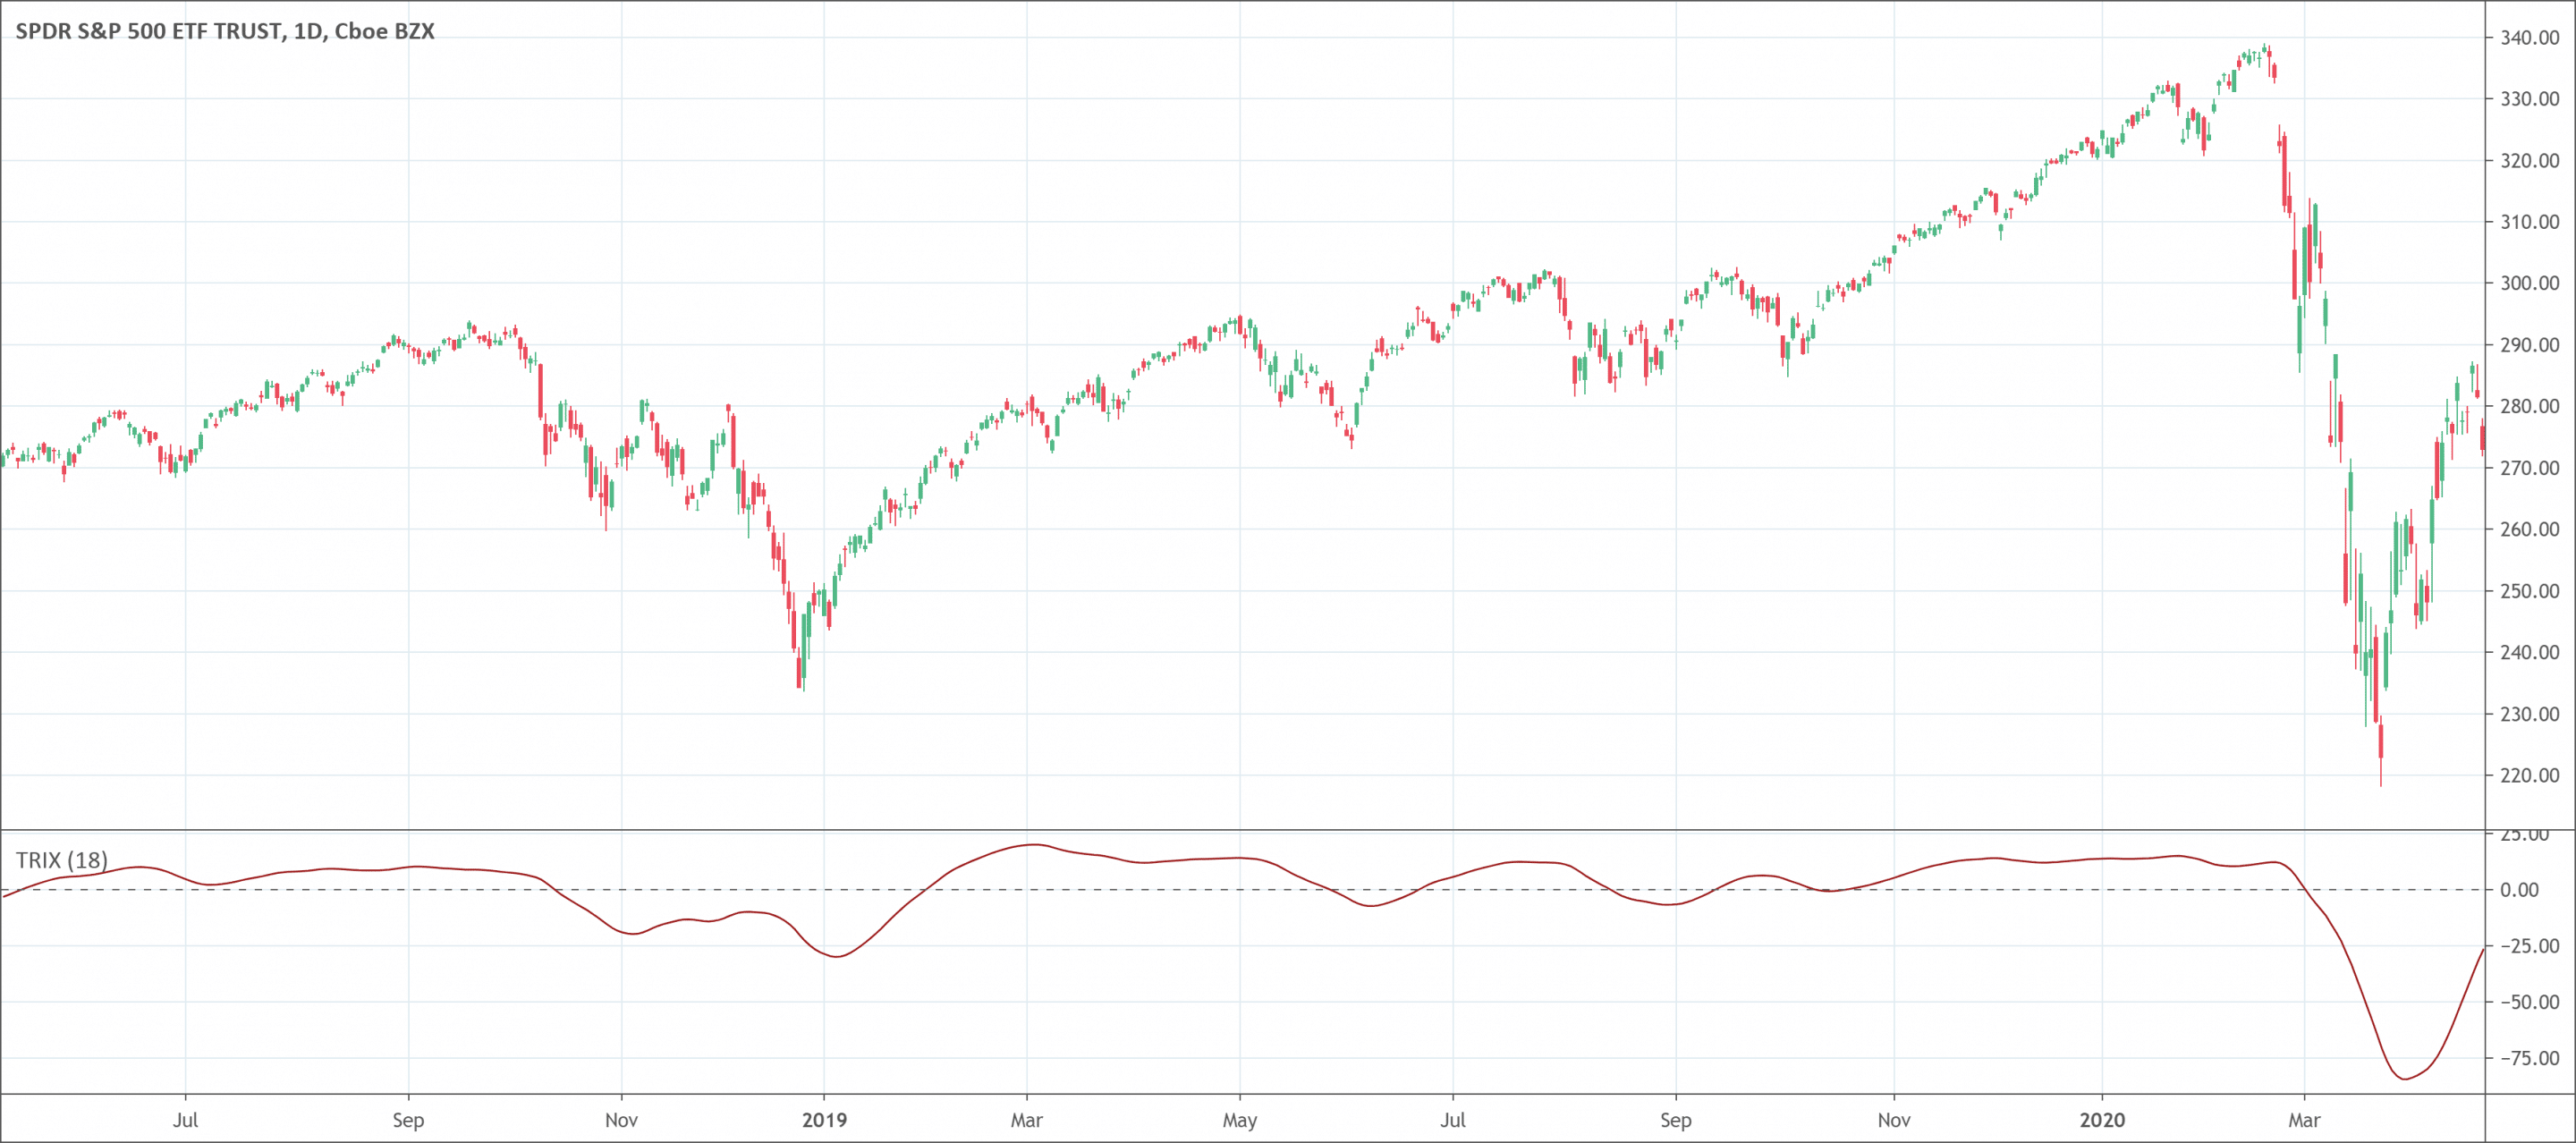 Trix stock indicator